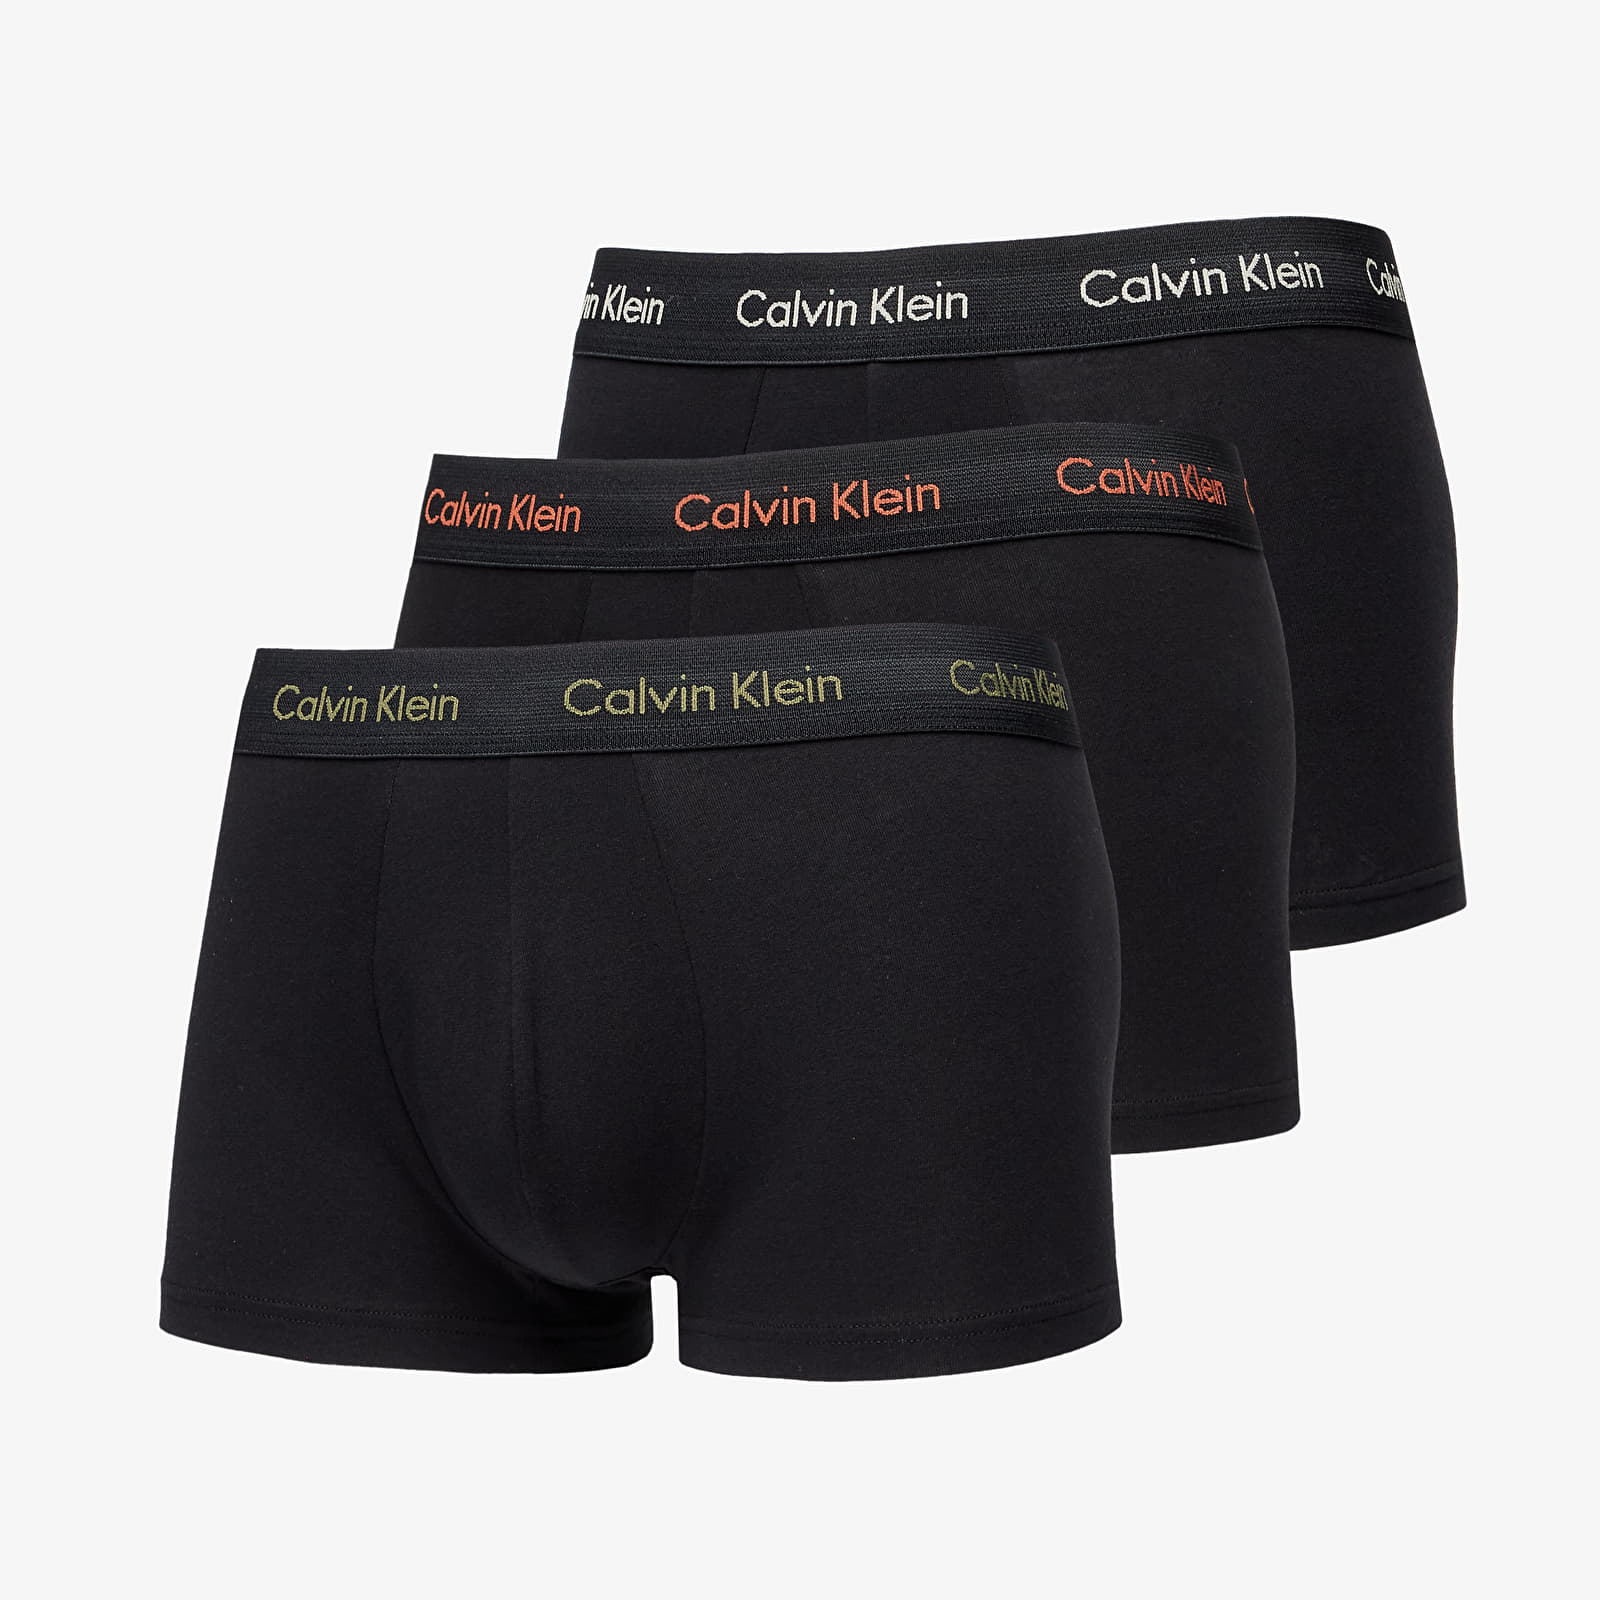 Boxer shorts Calvin Klein Cotton Stretch Low Rise Trunk 3-Pack Black